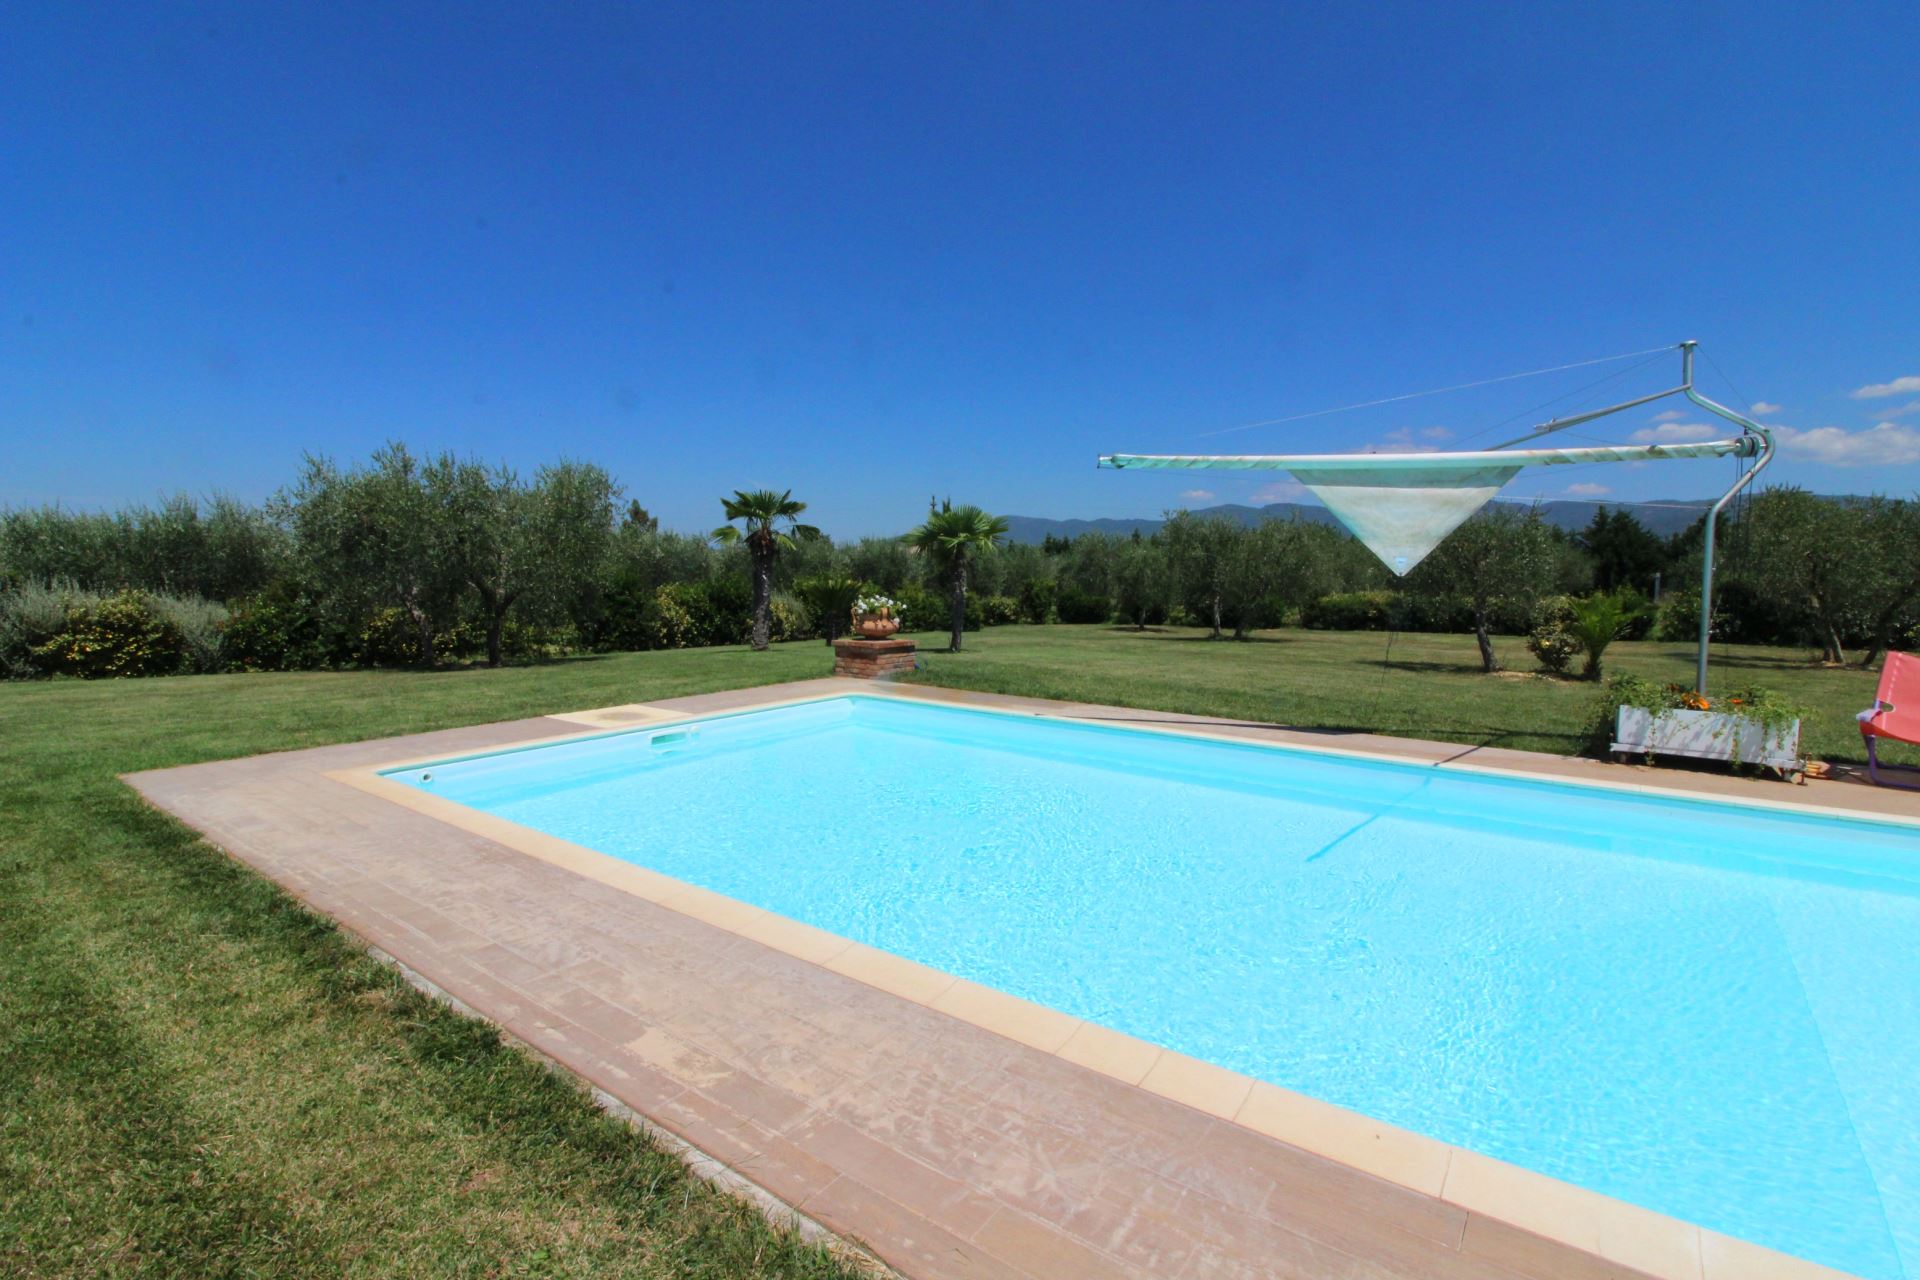 431_cdc684c_Vakantiehuis met privé zwembad Casetta il Girasole Toscane Cortona - Arezzo (29)